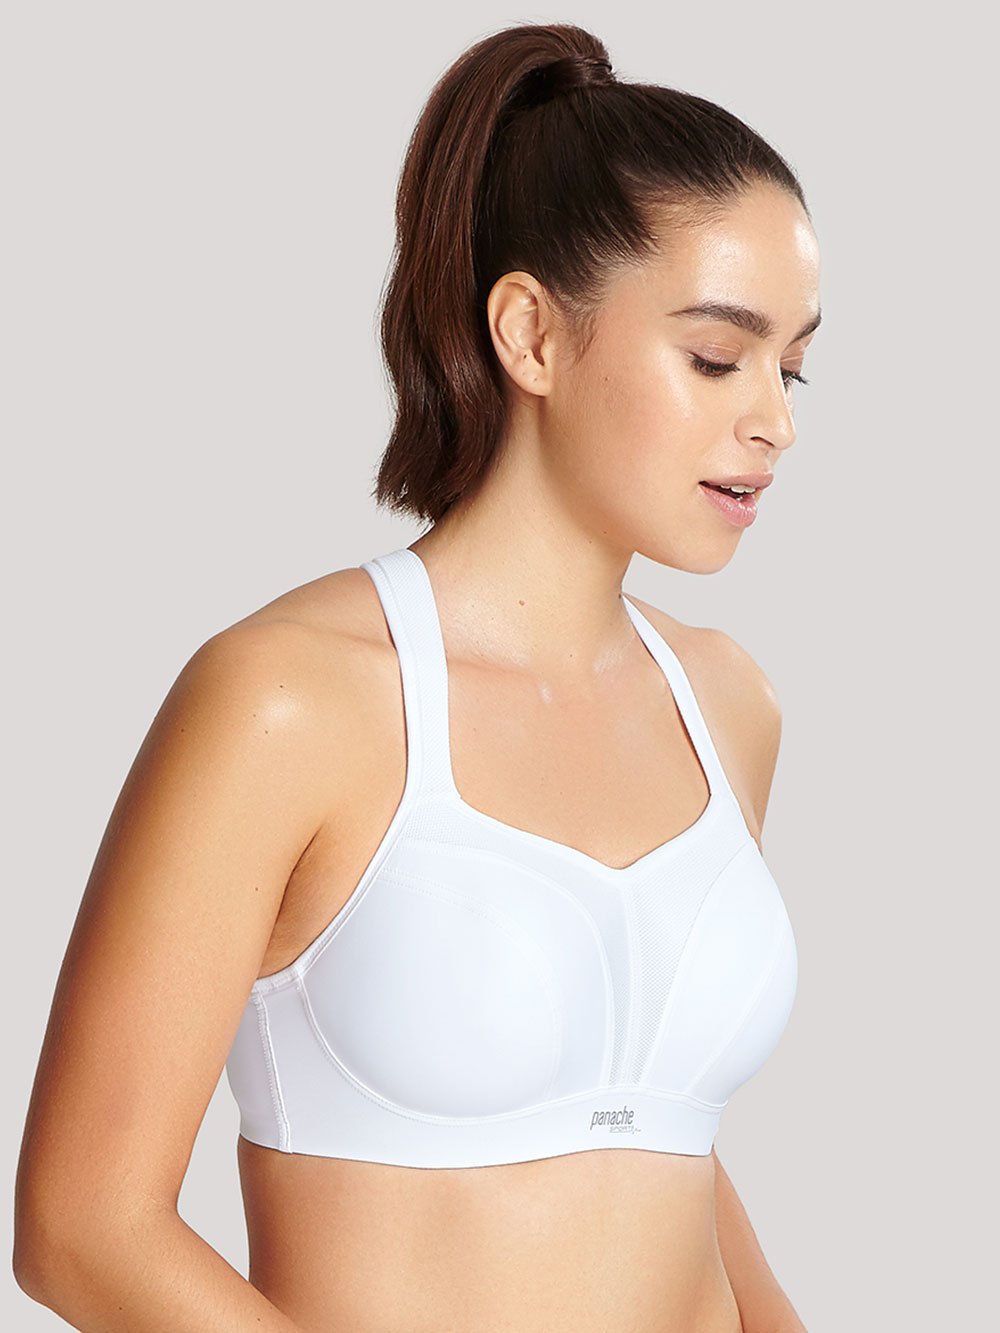 White push up sports bra add one cup size  Fashion, Most comfortable bra,  Hot pink sports bra